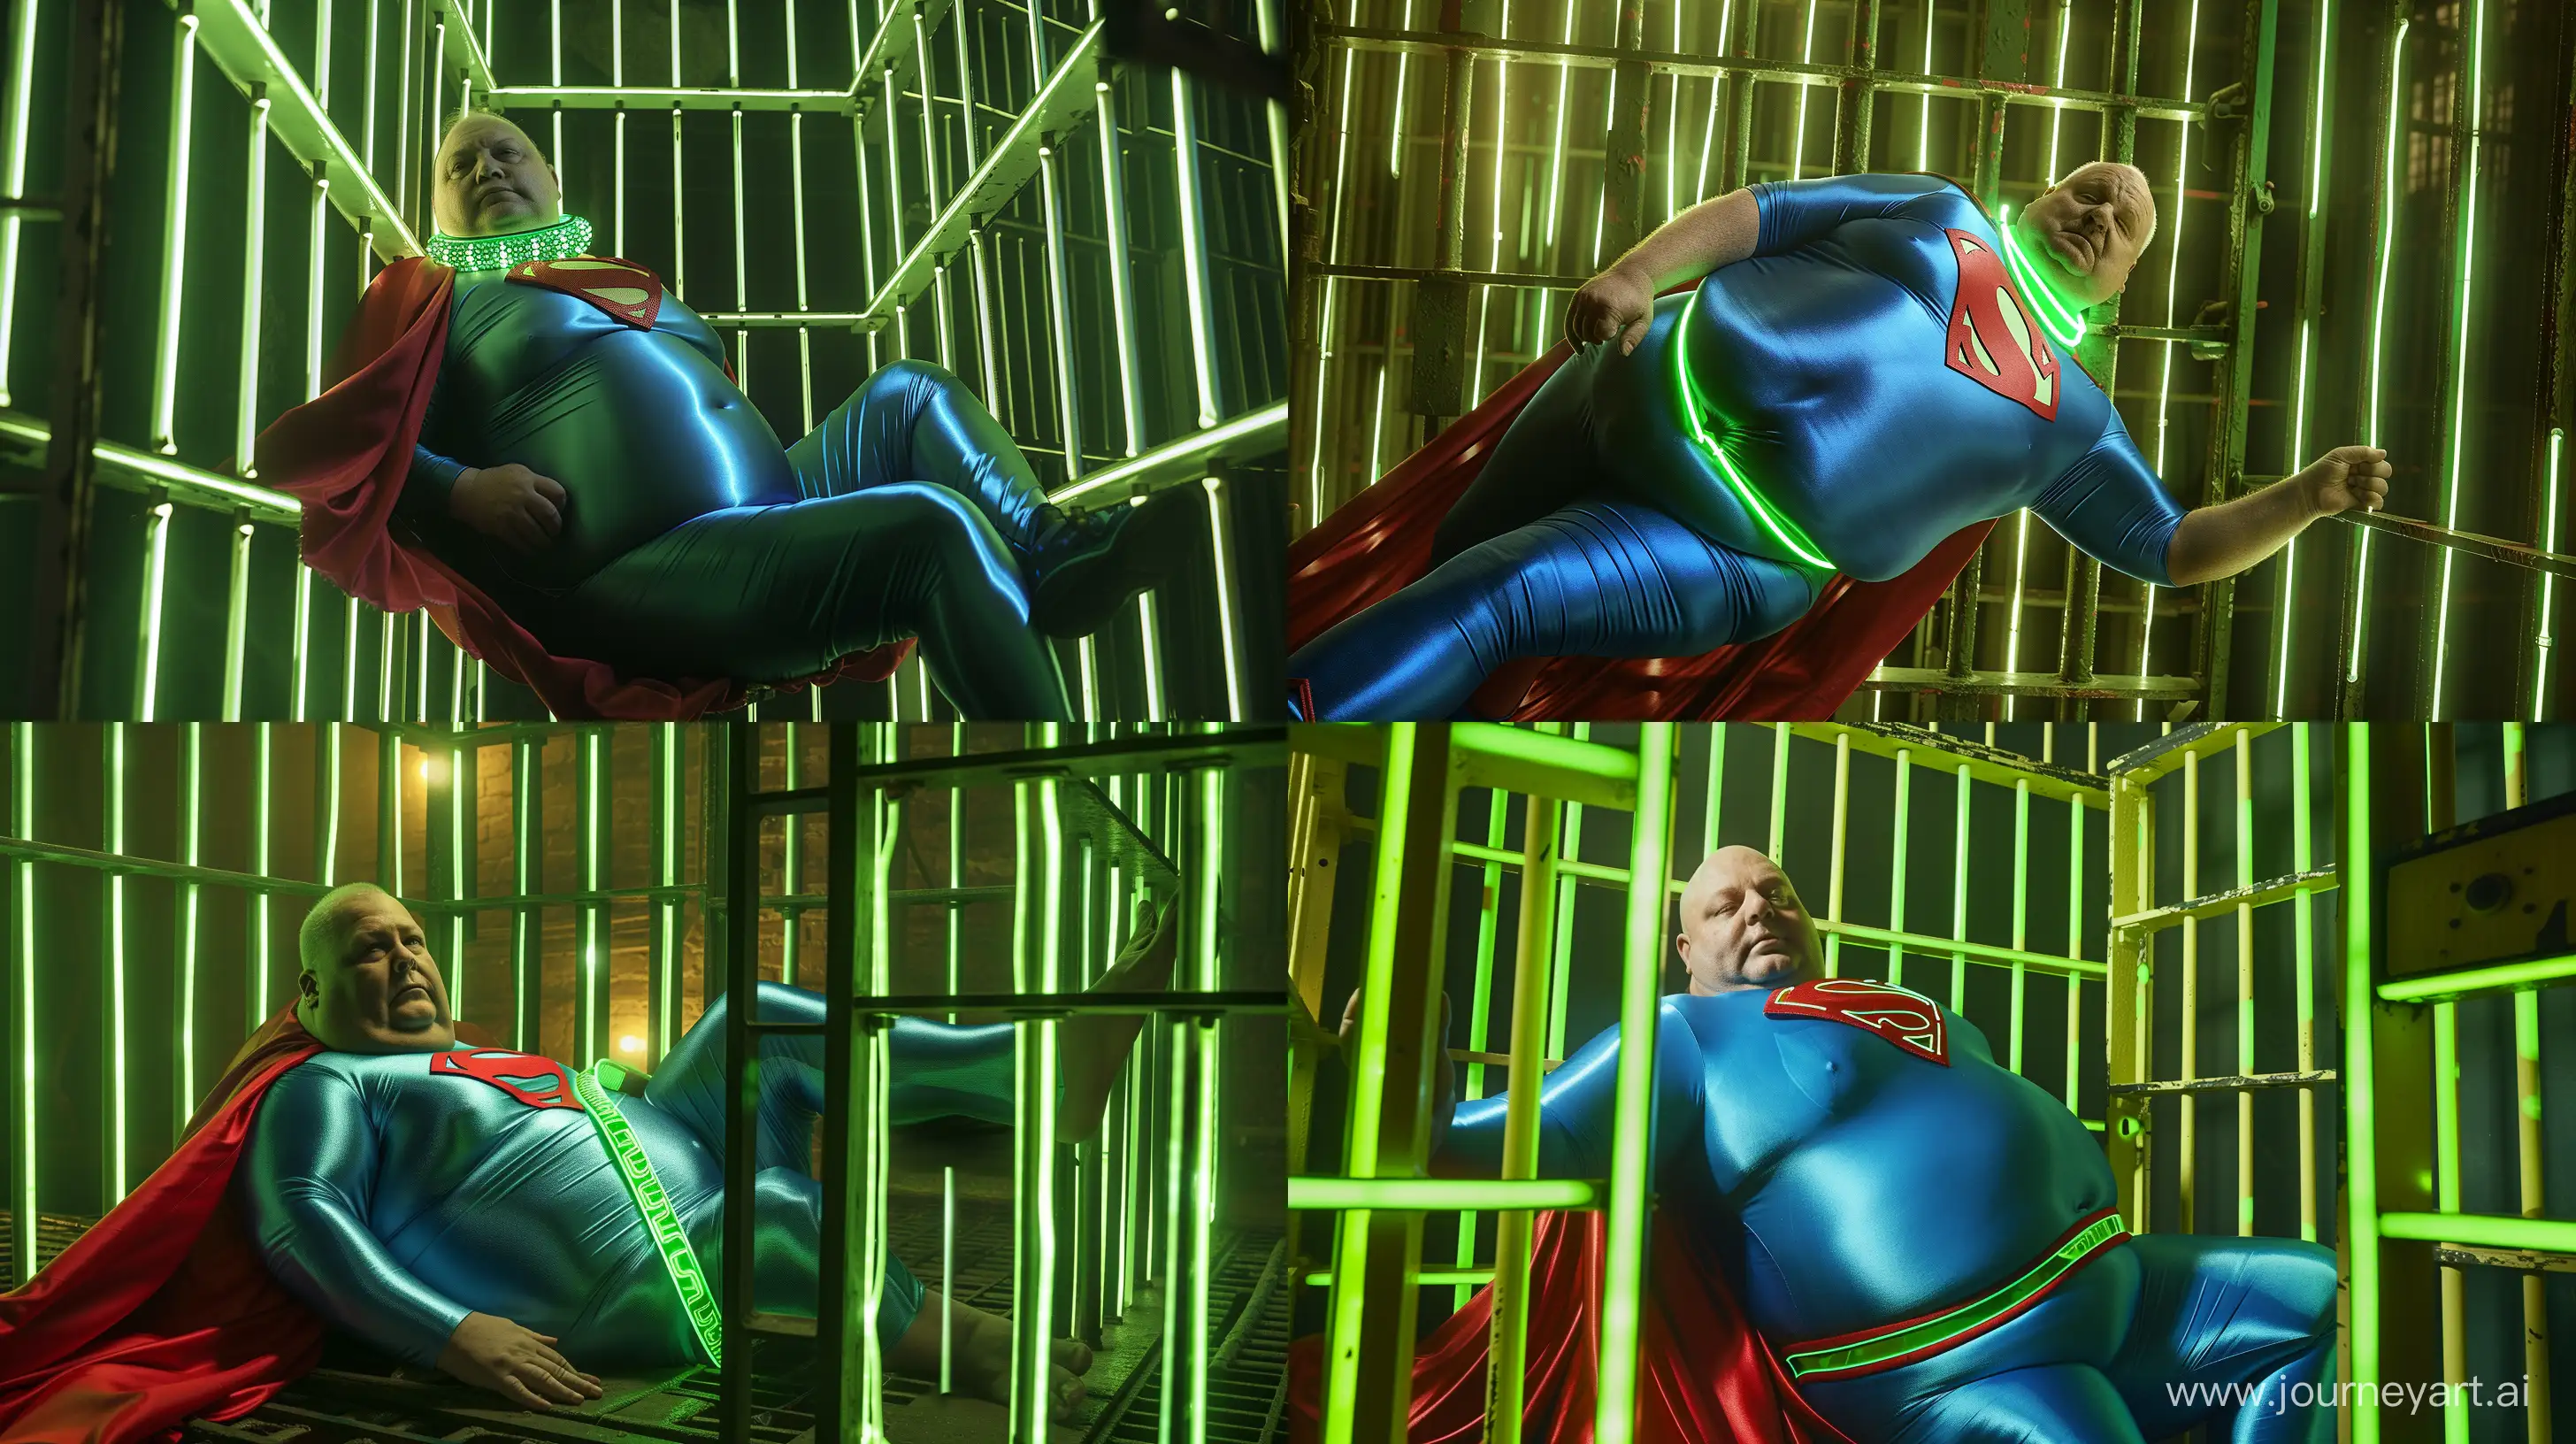 Elderly-Superhero-in-Neon-Prison